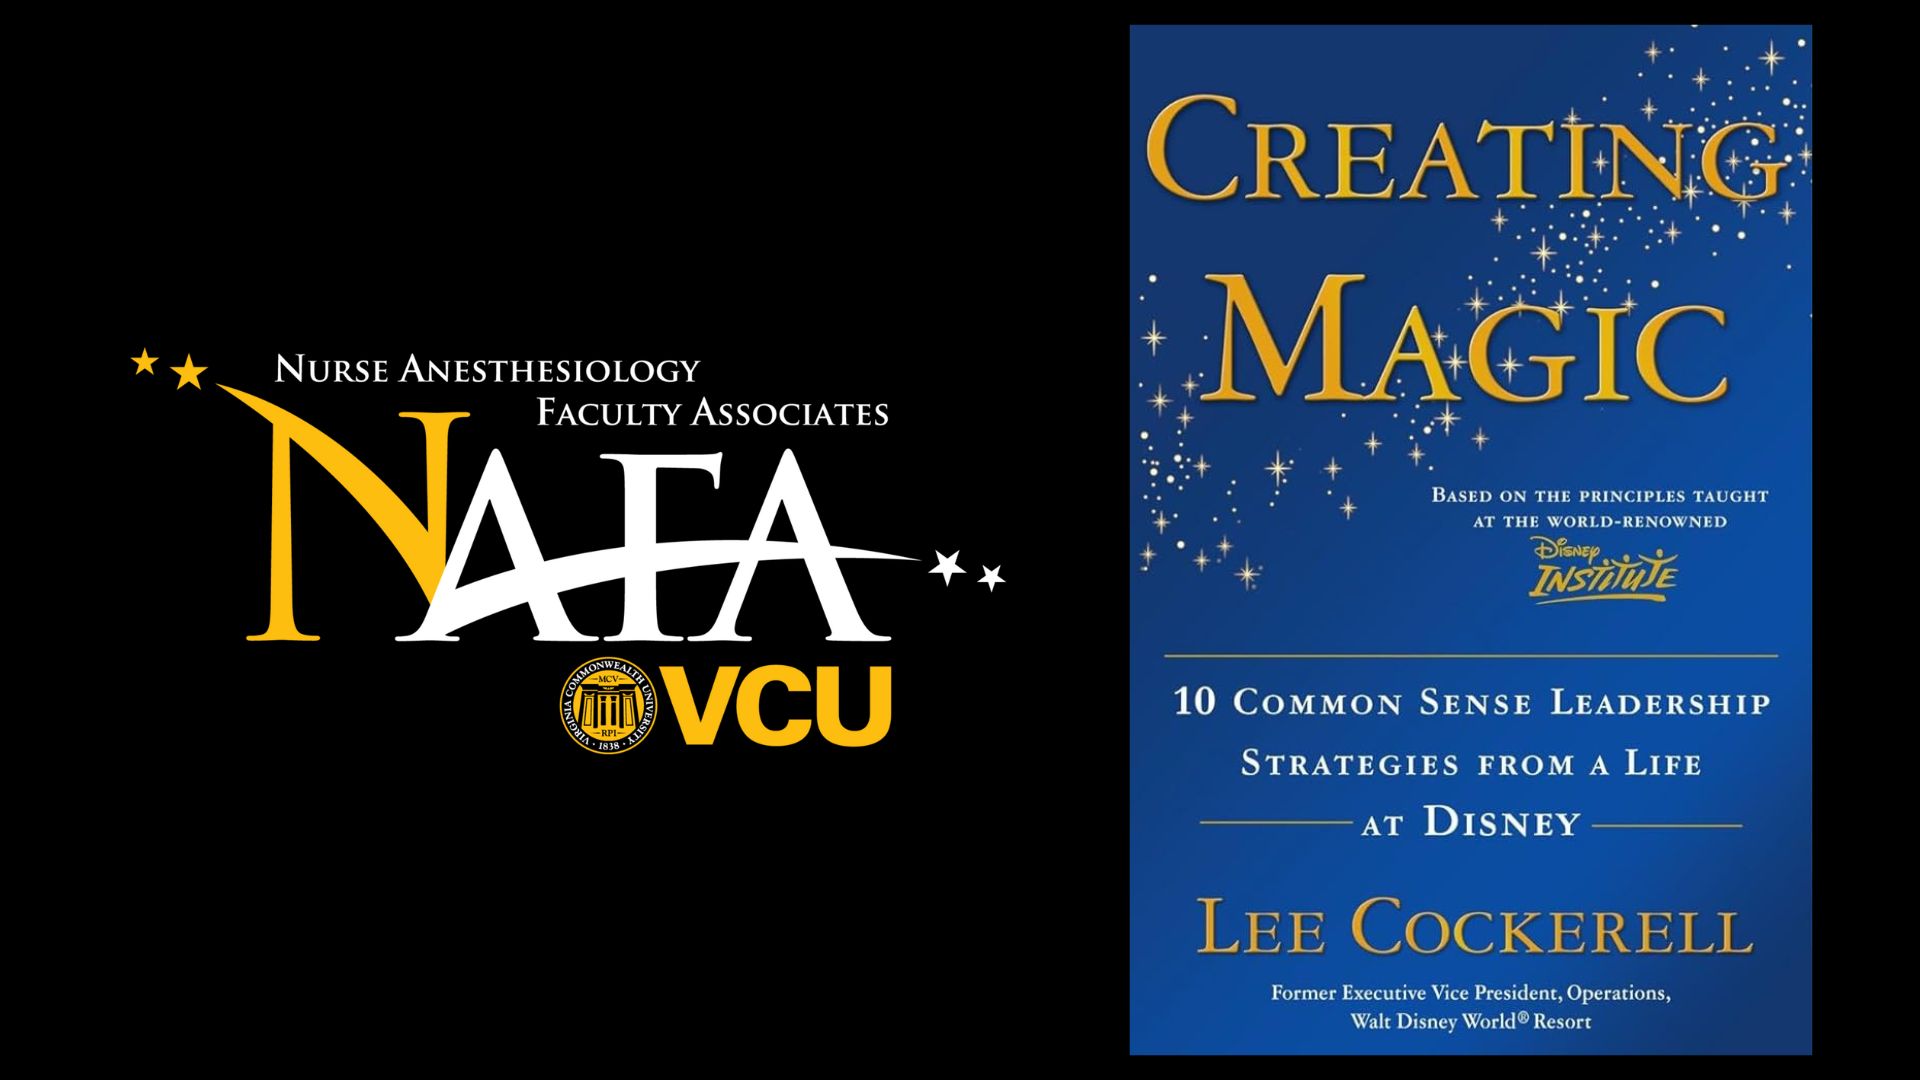 Creating Magic: 10 Common Sense Leadership Strategies from a Life at Disney by Lee Cockerell